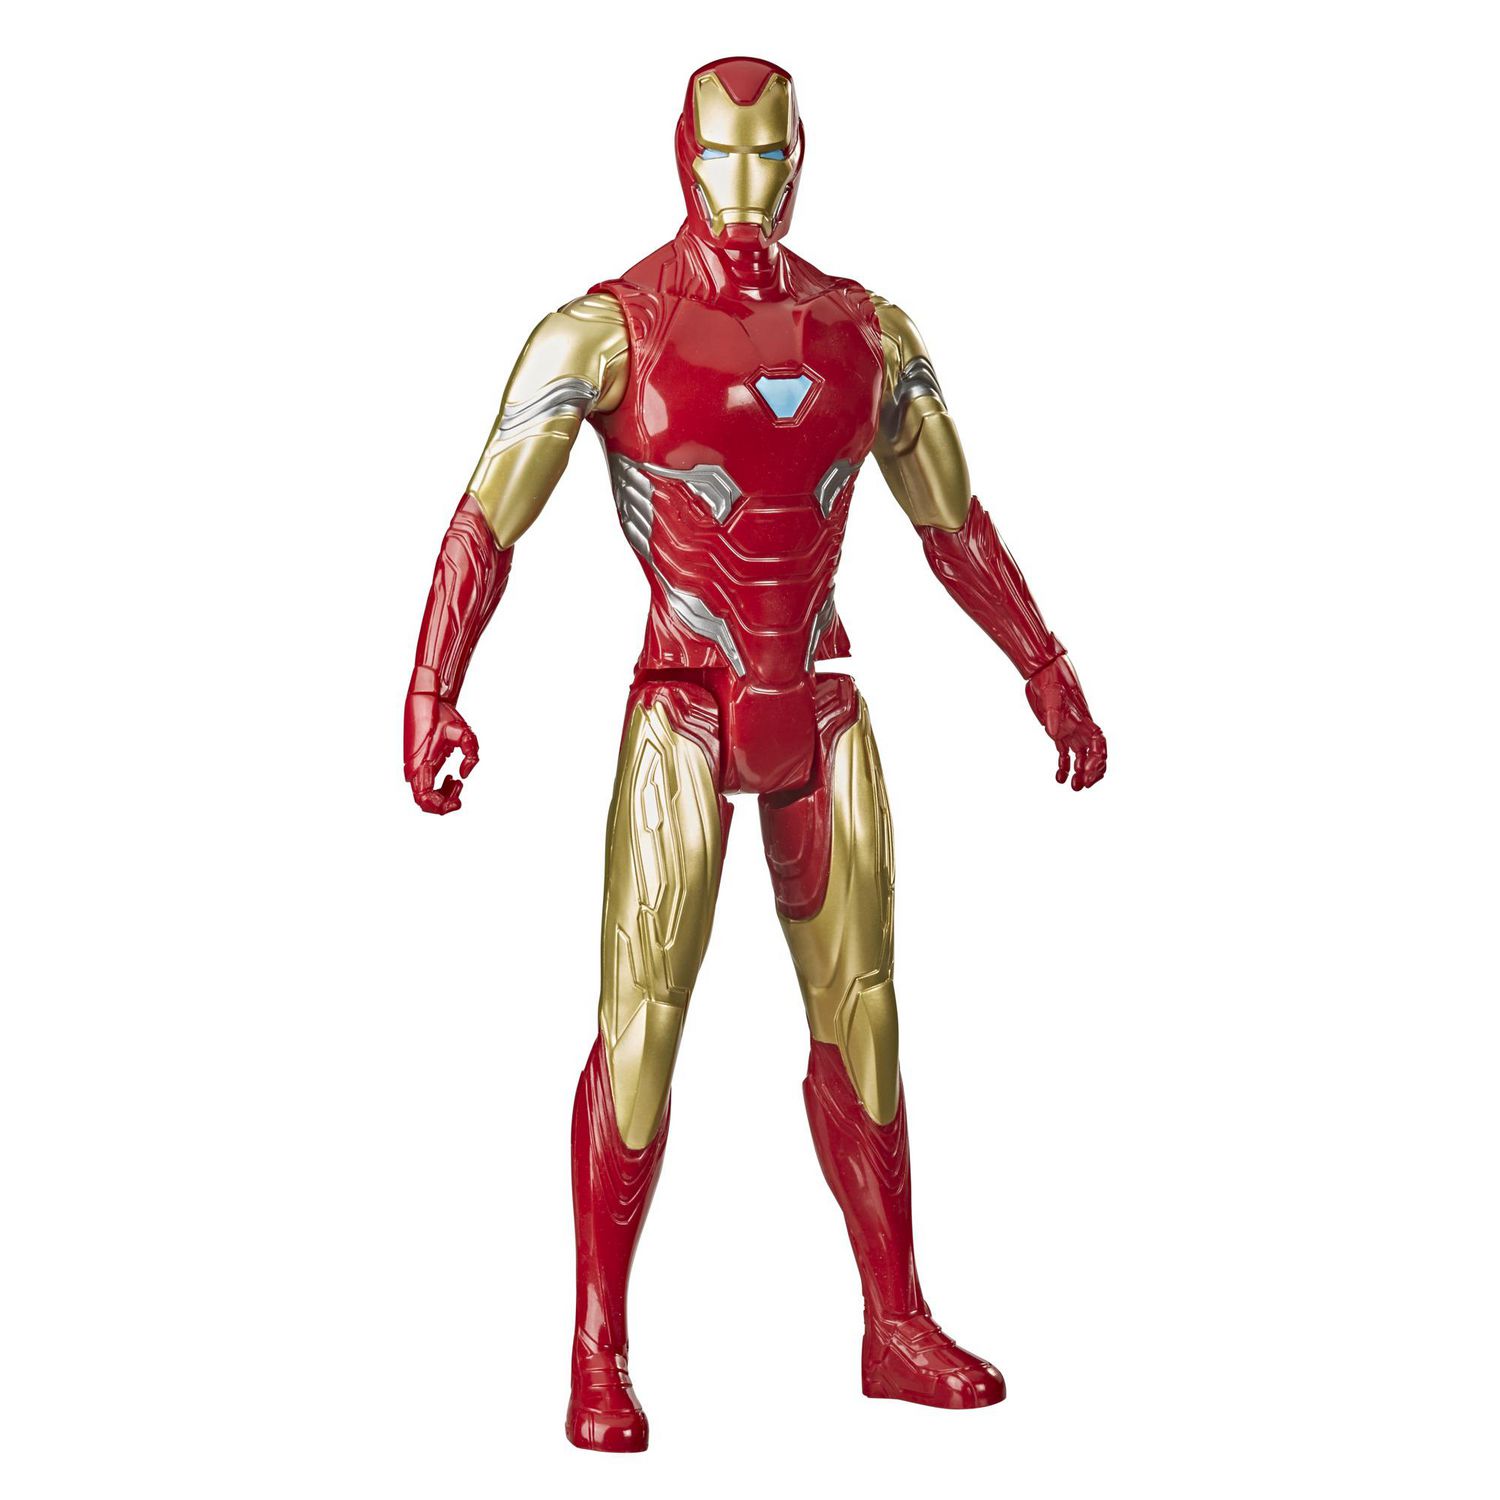 Avengers Infinity War Marvel Super Heroes Jouets Iron Man Captain